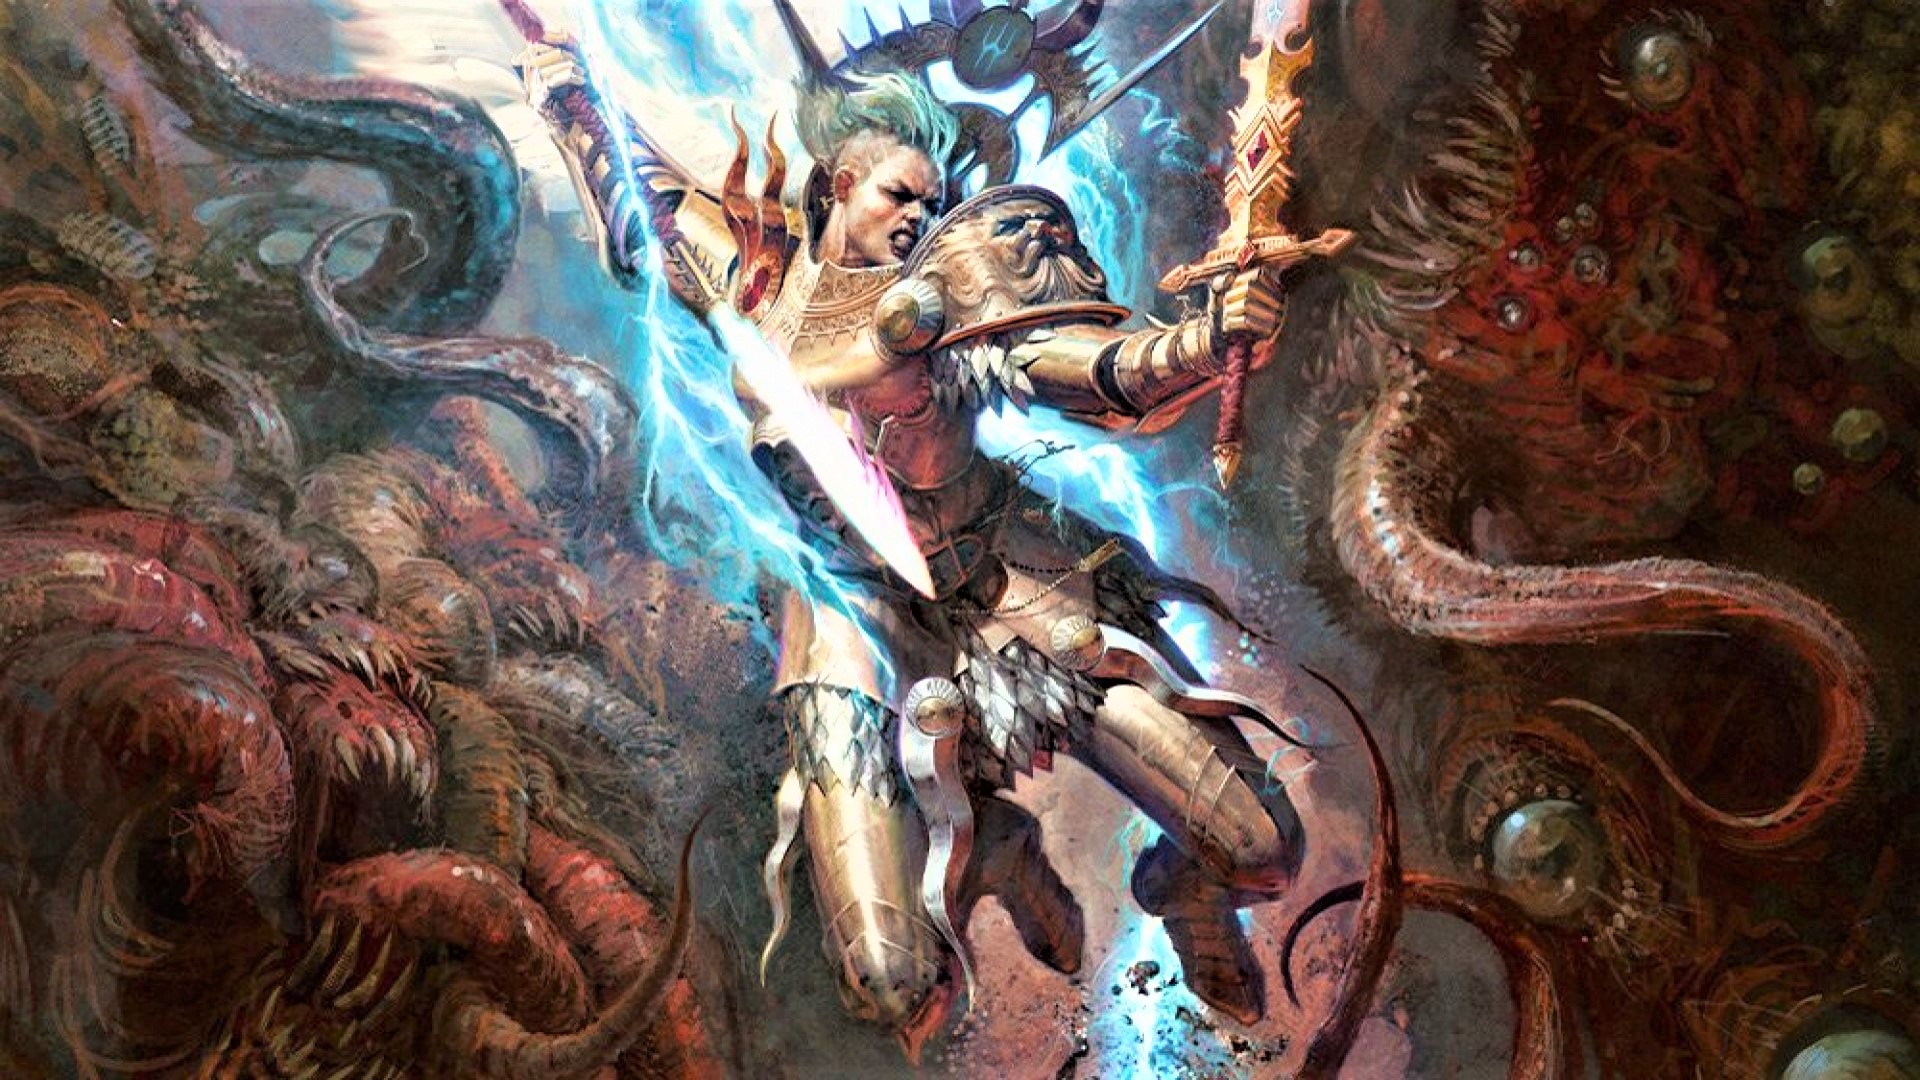 https://www.wargamer.com/wp-content/uploads/2021/05/age-of-sigmar-3rd-edition-announced-yndrasta-the-celestial-spear-fighting-chaos-artwork.jpg